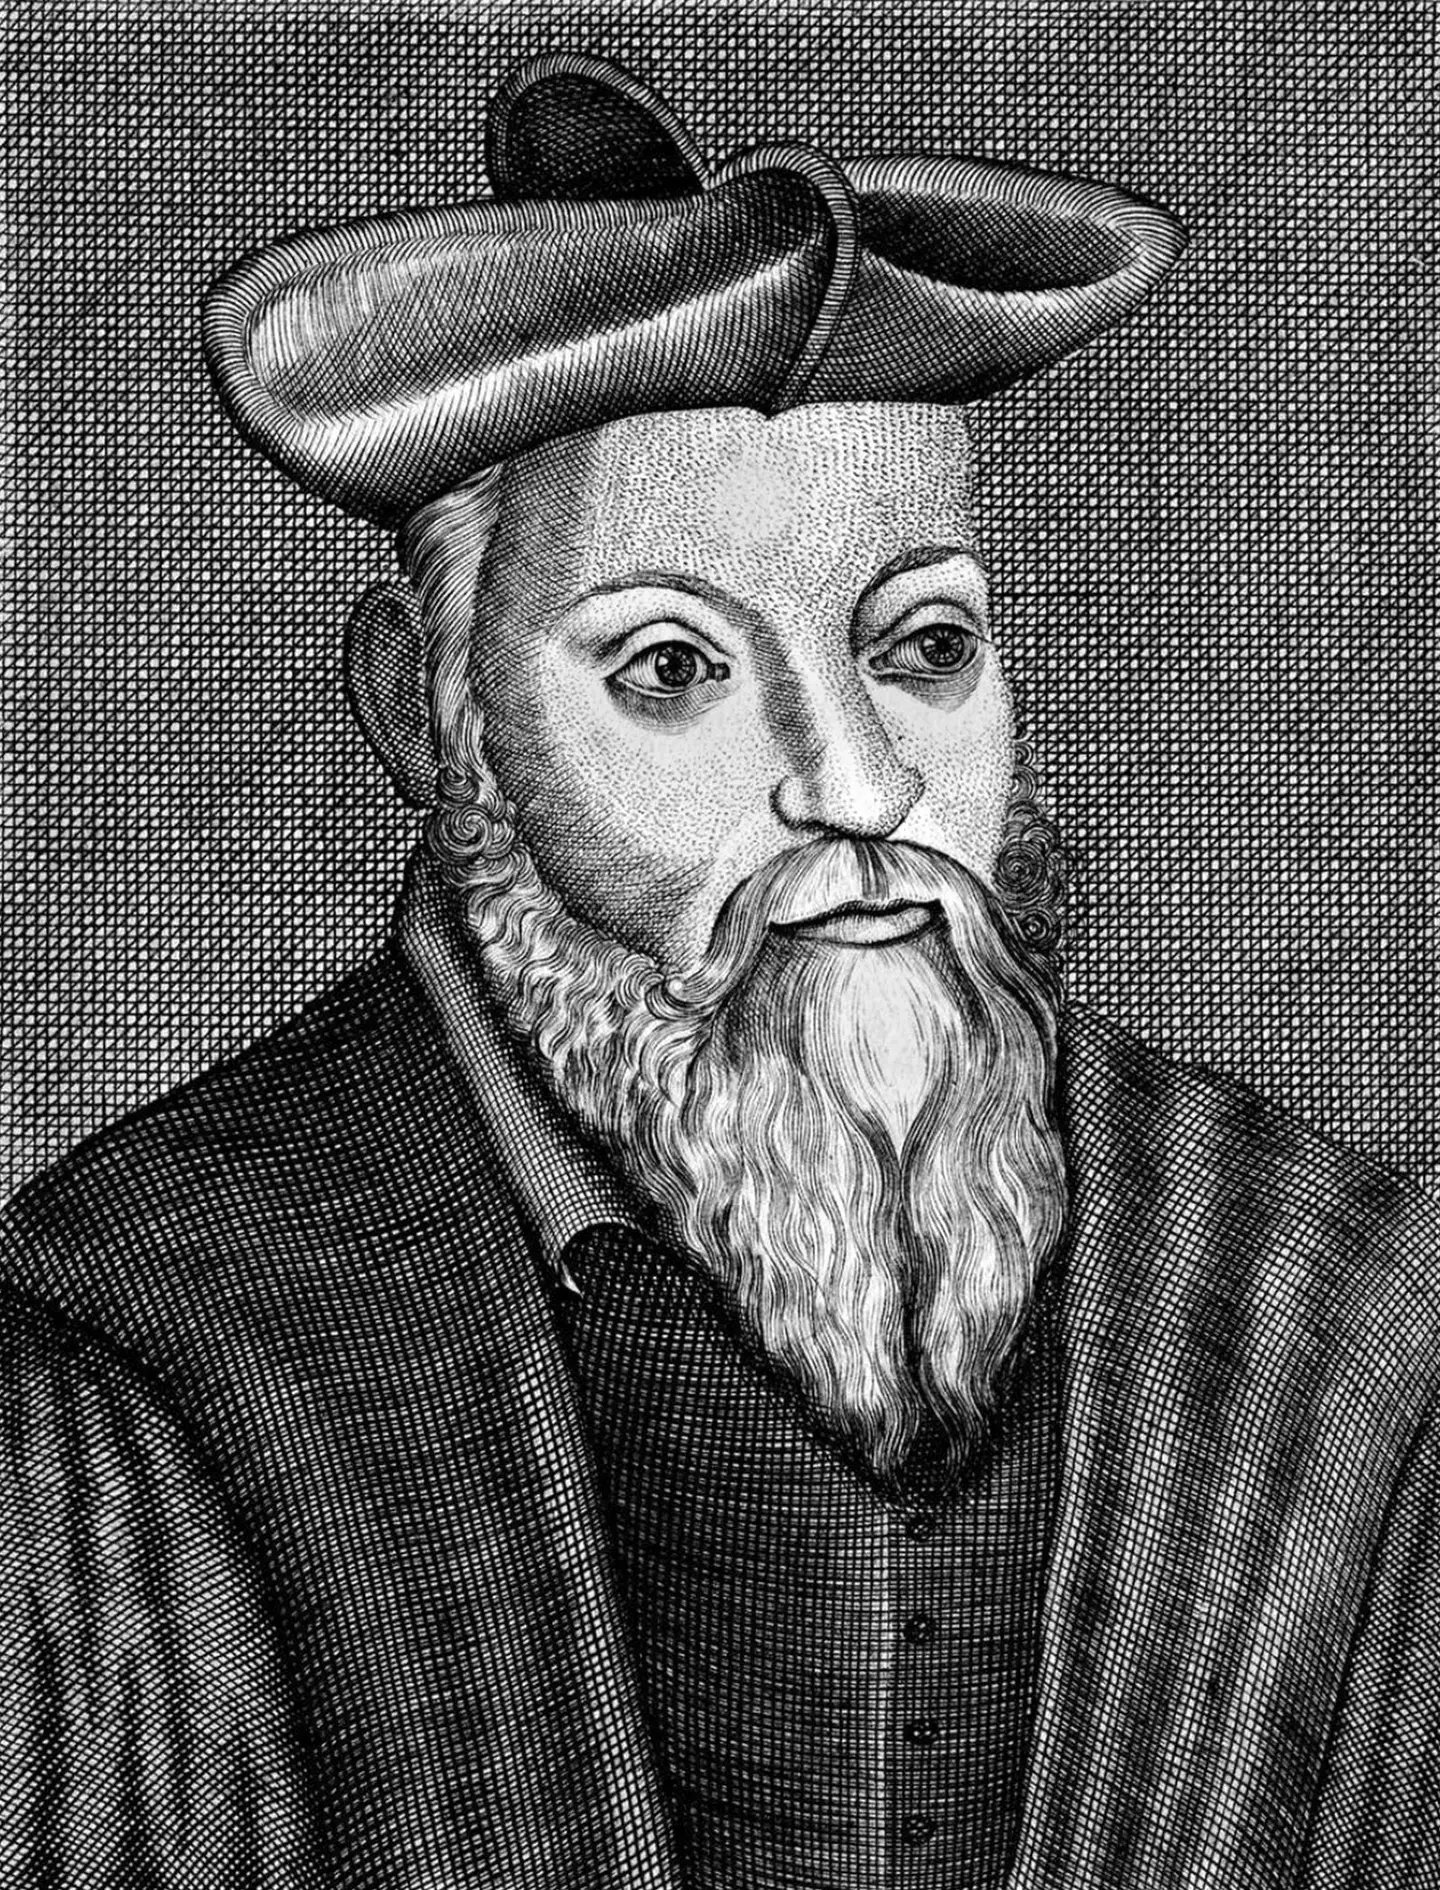 Nostradamus was a fortune-teller and 16th century astrologist.